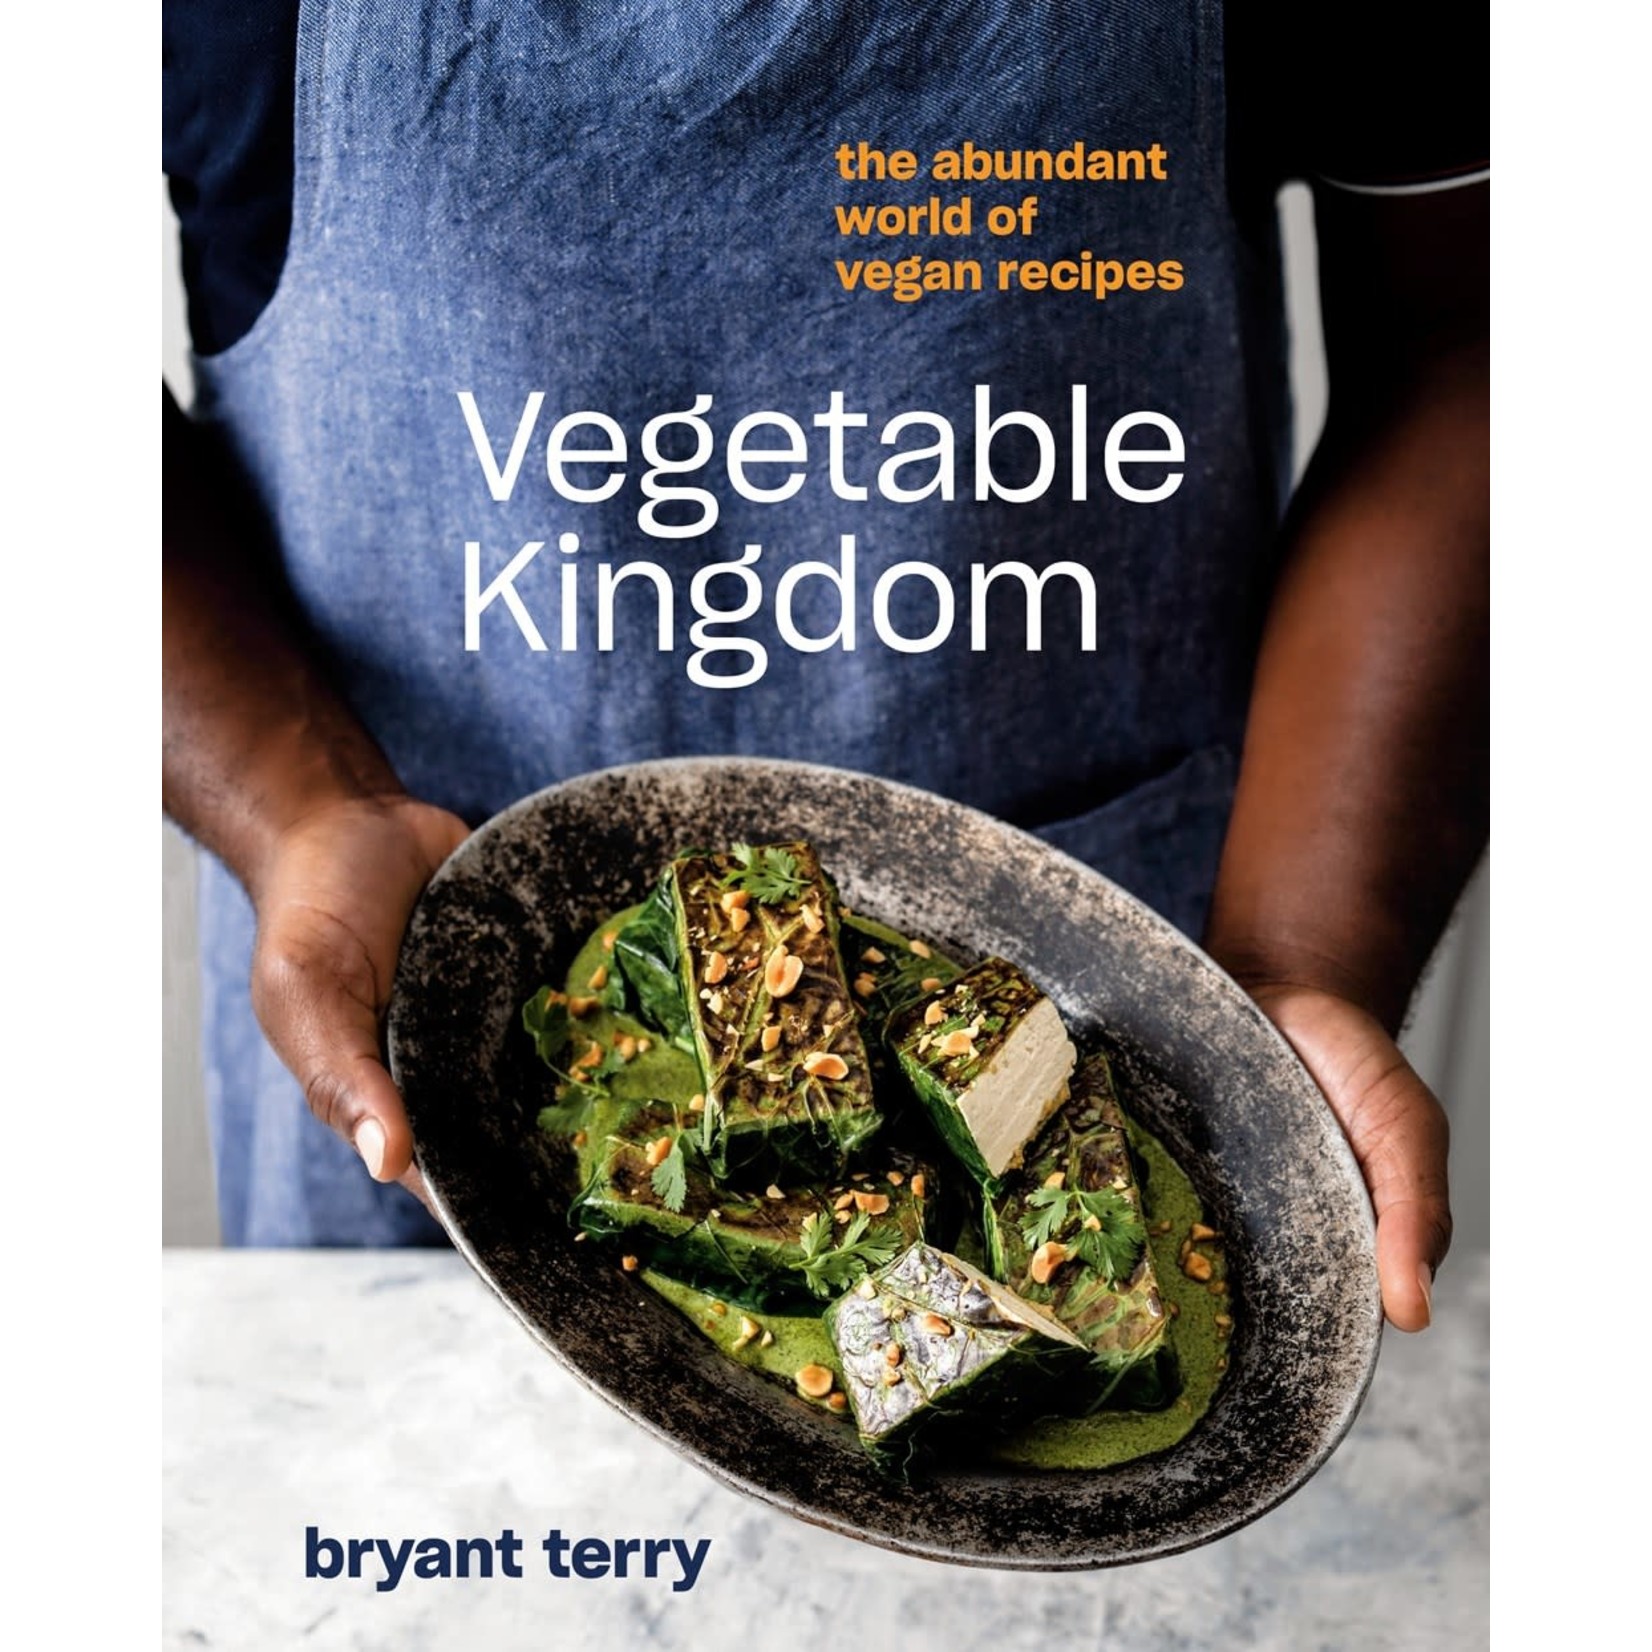 Vegetable Kingdom: The Abundant World of Vegan Recipes 2'20 hc